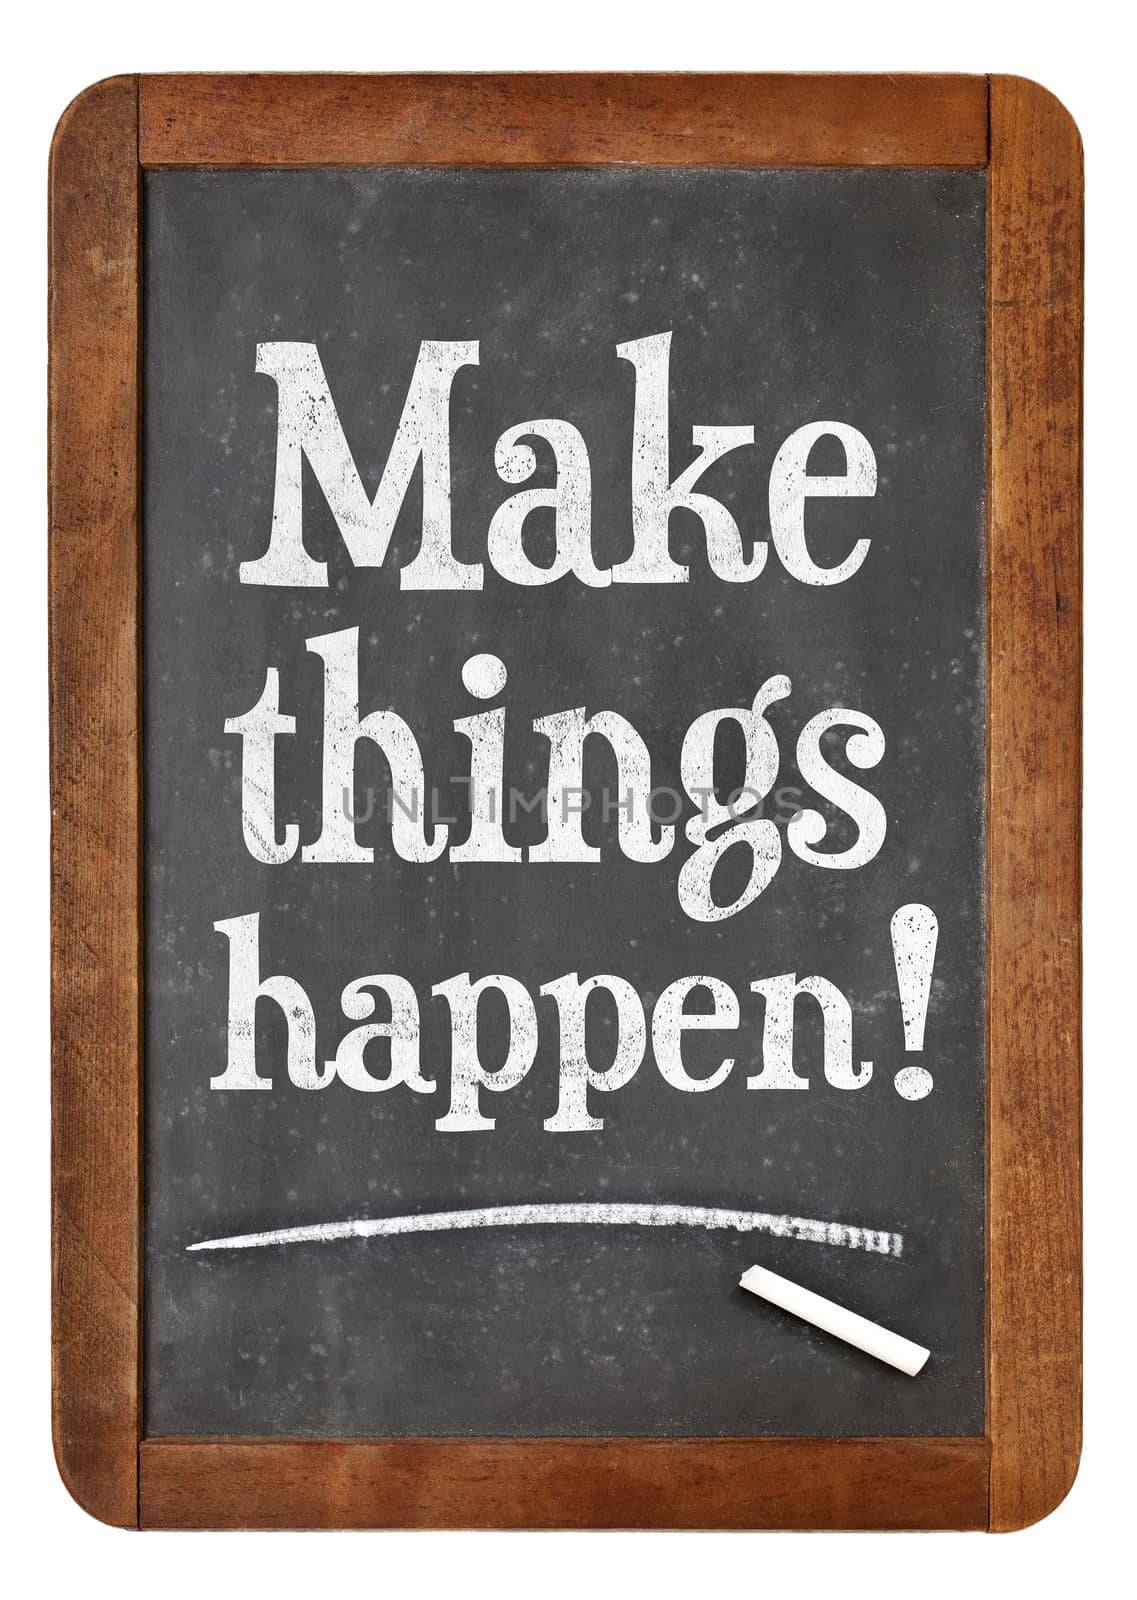 Make things happen advice by PixelsAway